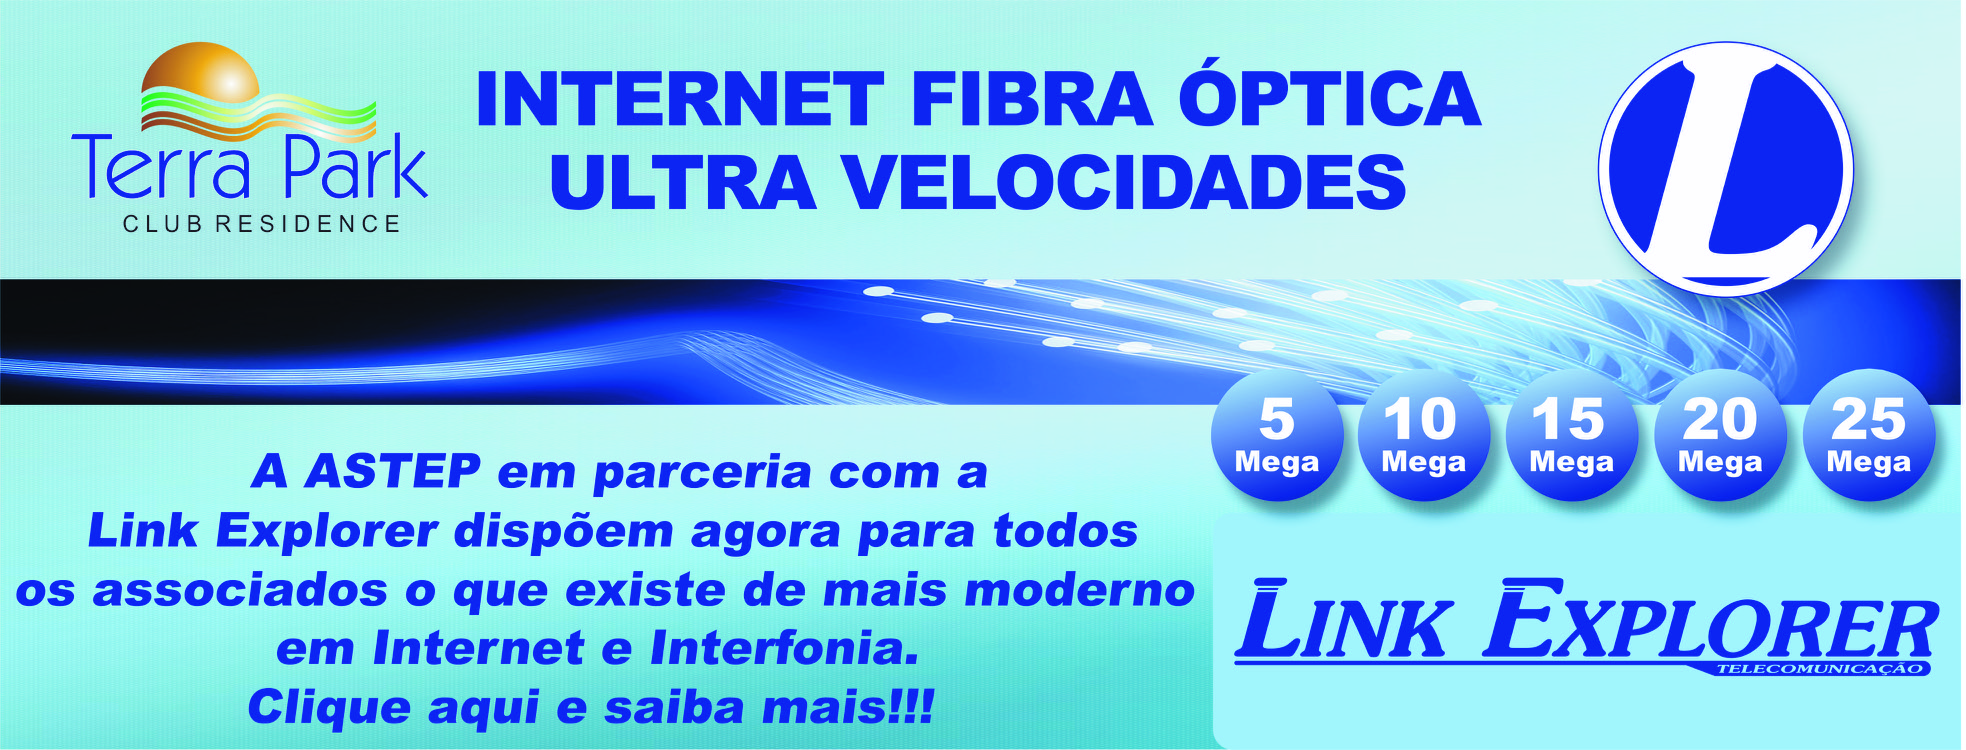 INTERNET FIBRA ÓPTICA - ULTRA VELOCIDADES